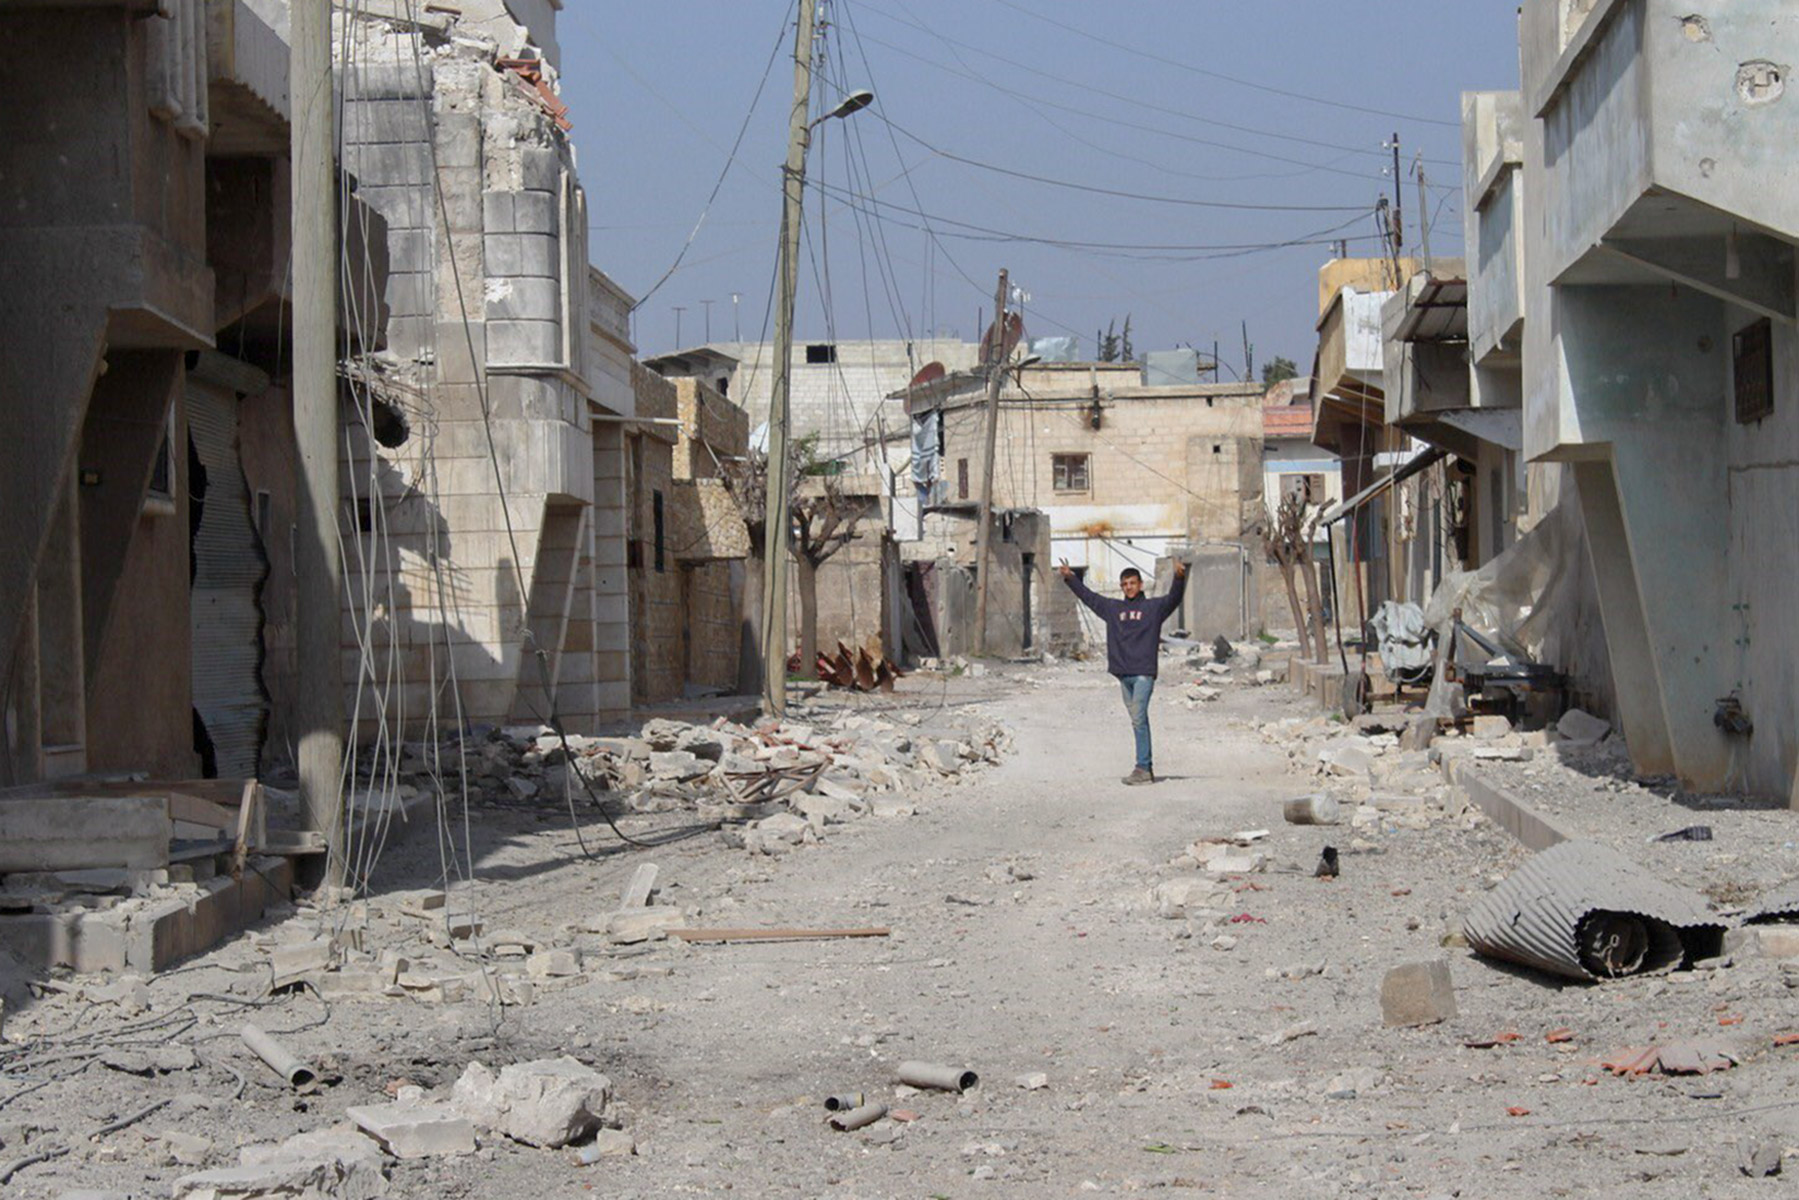 Aftermath of Turkish bombing in Jandaris, Afrin